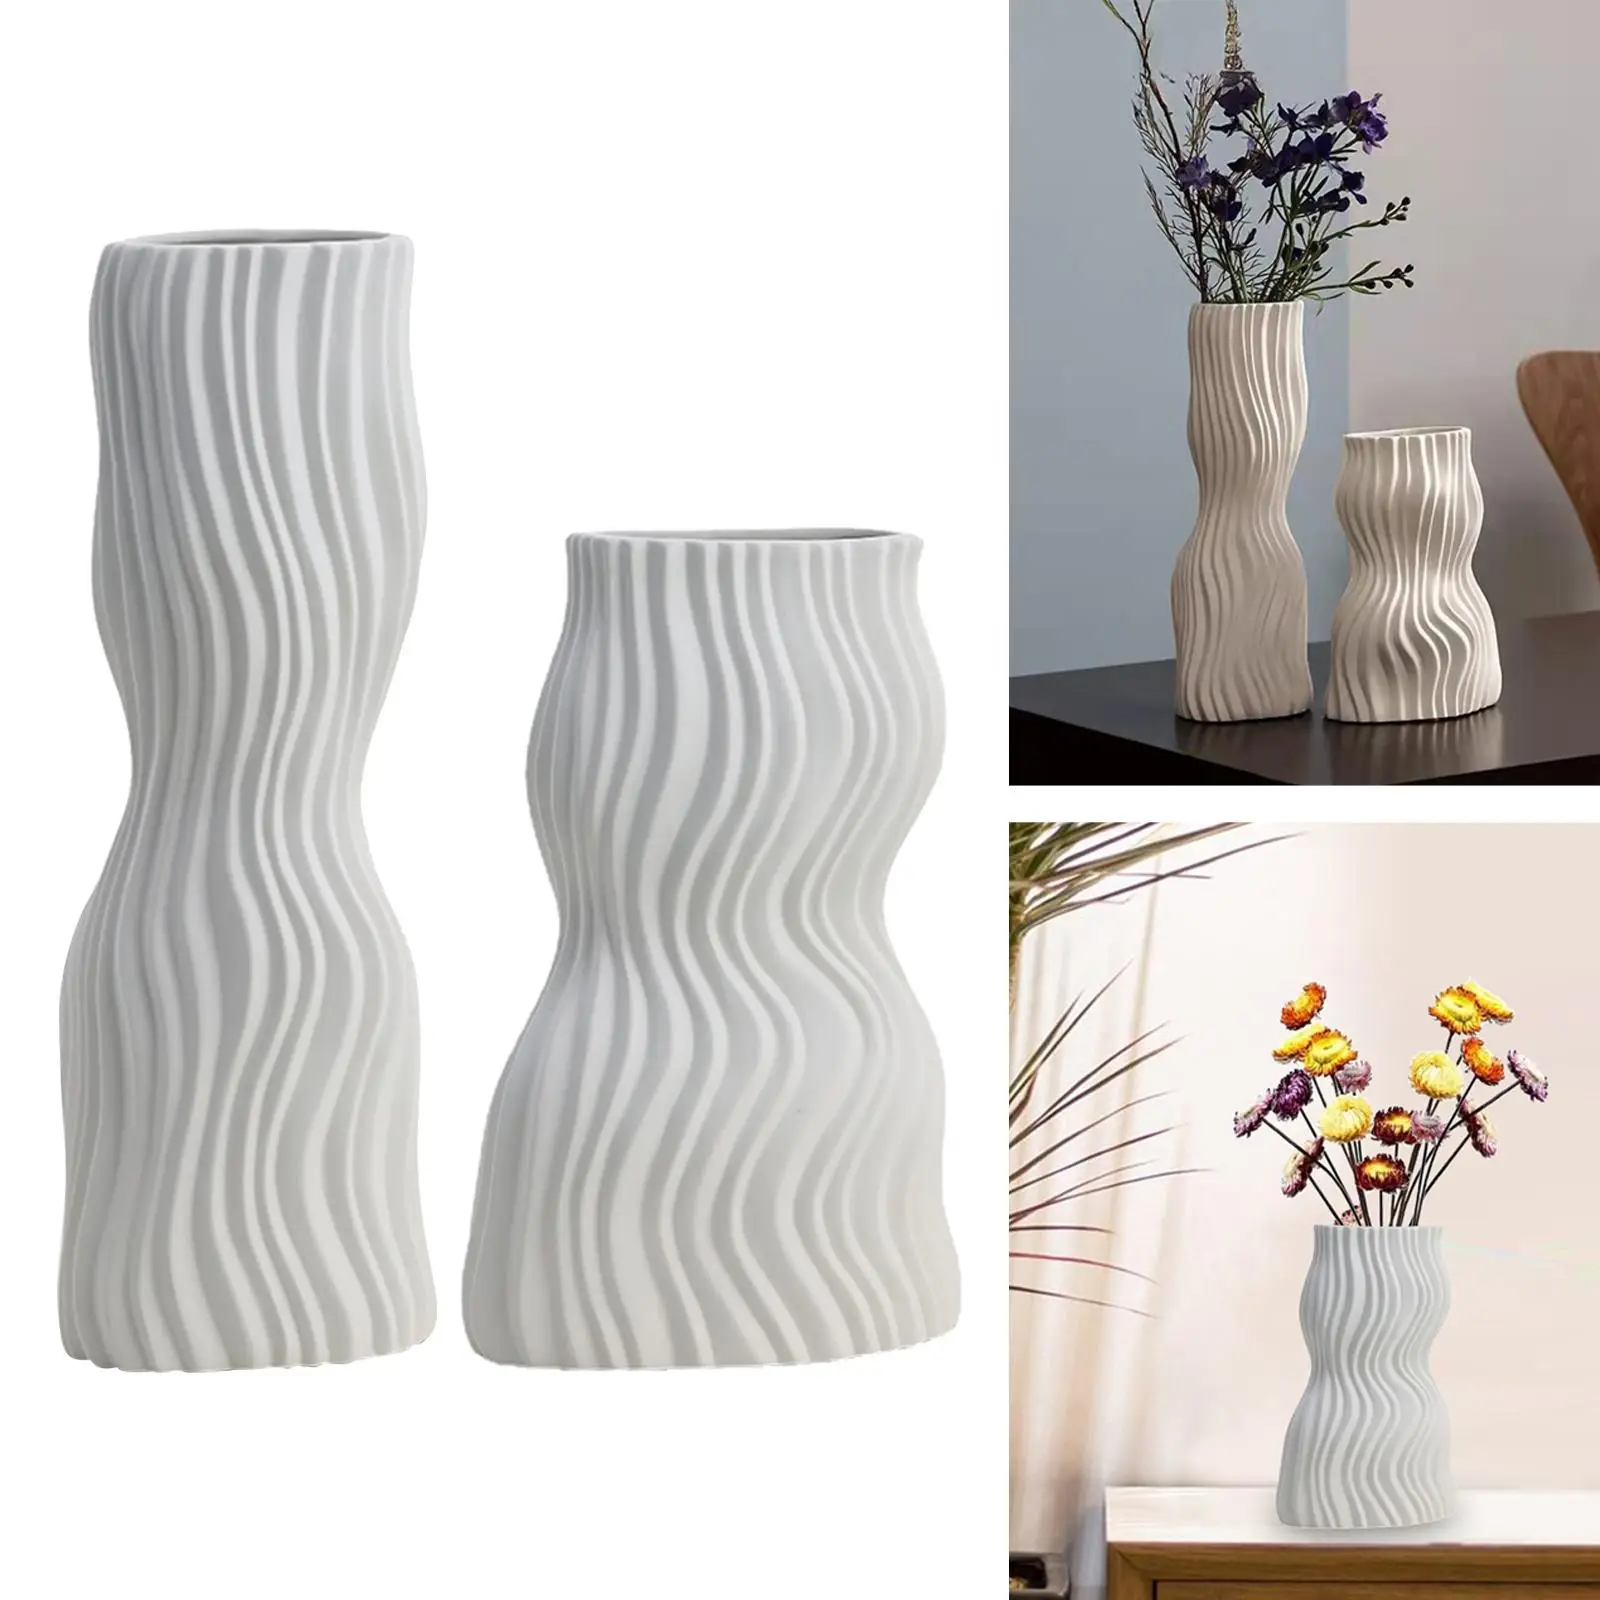 Water Pleated Ceramic Flower Vase Simple Modern Geometric Flower Arrangement Vase for Home Party Decor